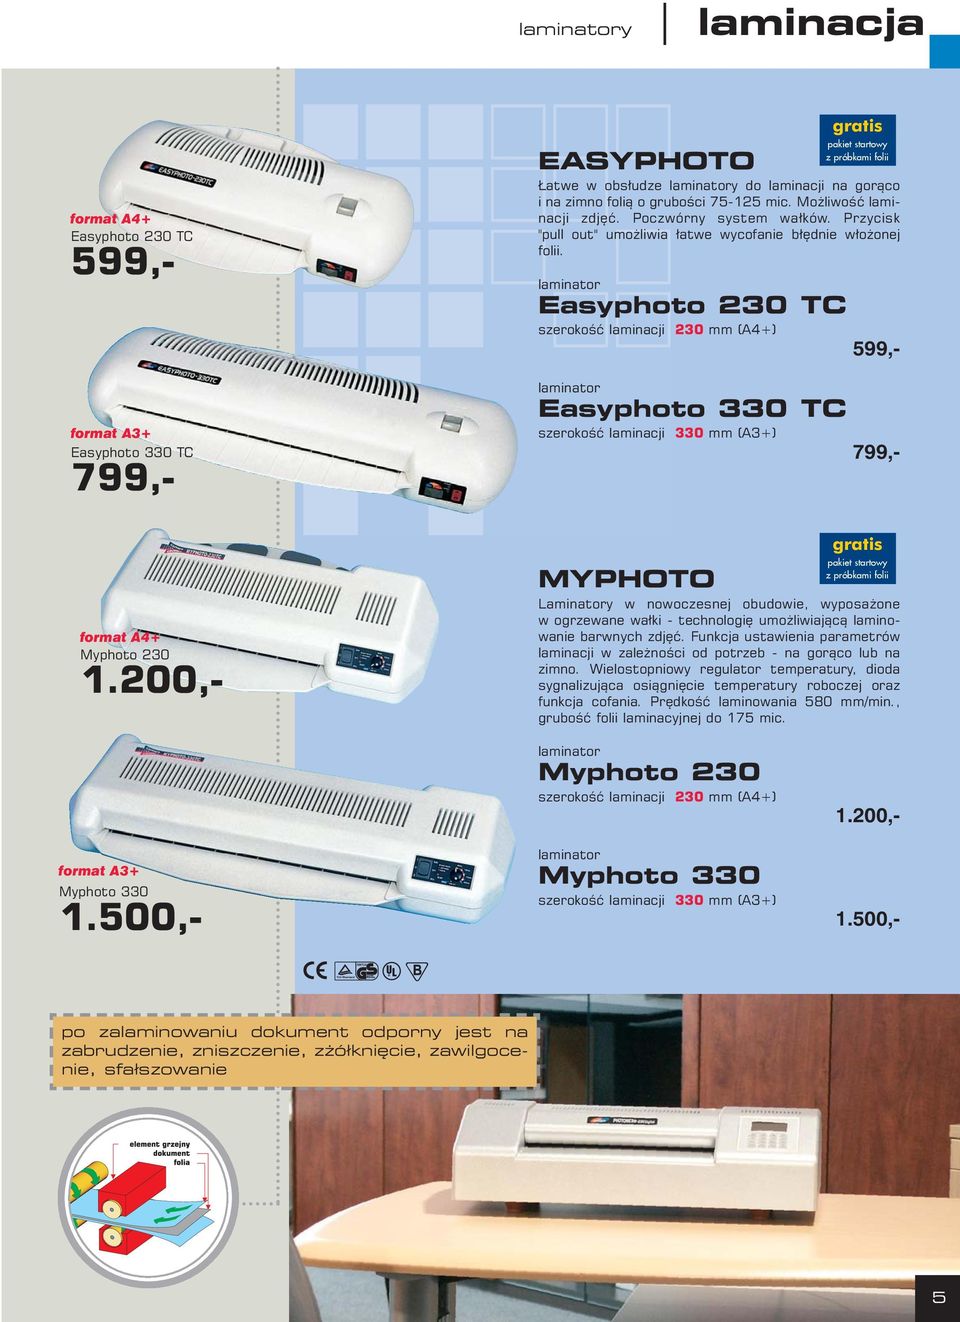 laminator Easyphoto 230 TC szerokość laminacji 230 mm (A4+) 599,- laminator Easyphoto 330 TC szerokość laminacji 330 mm (A3+) 799,- format A4+ Myphoto 230 1.